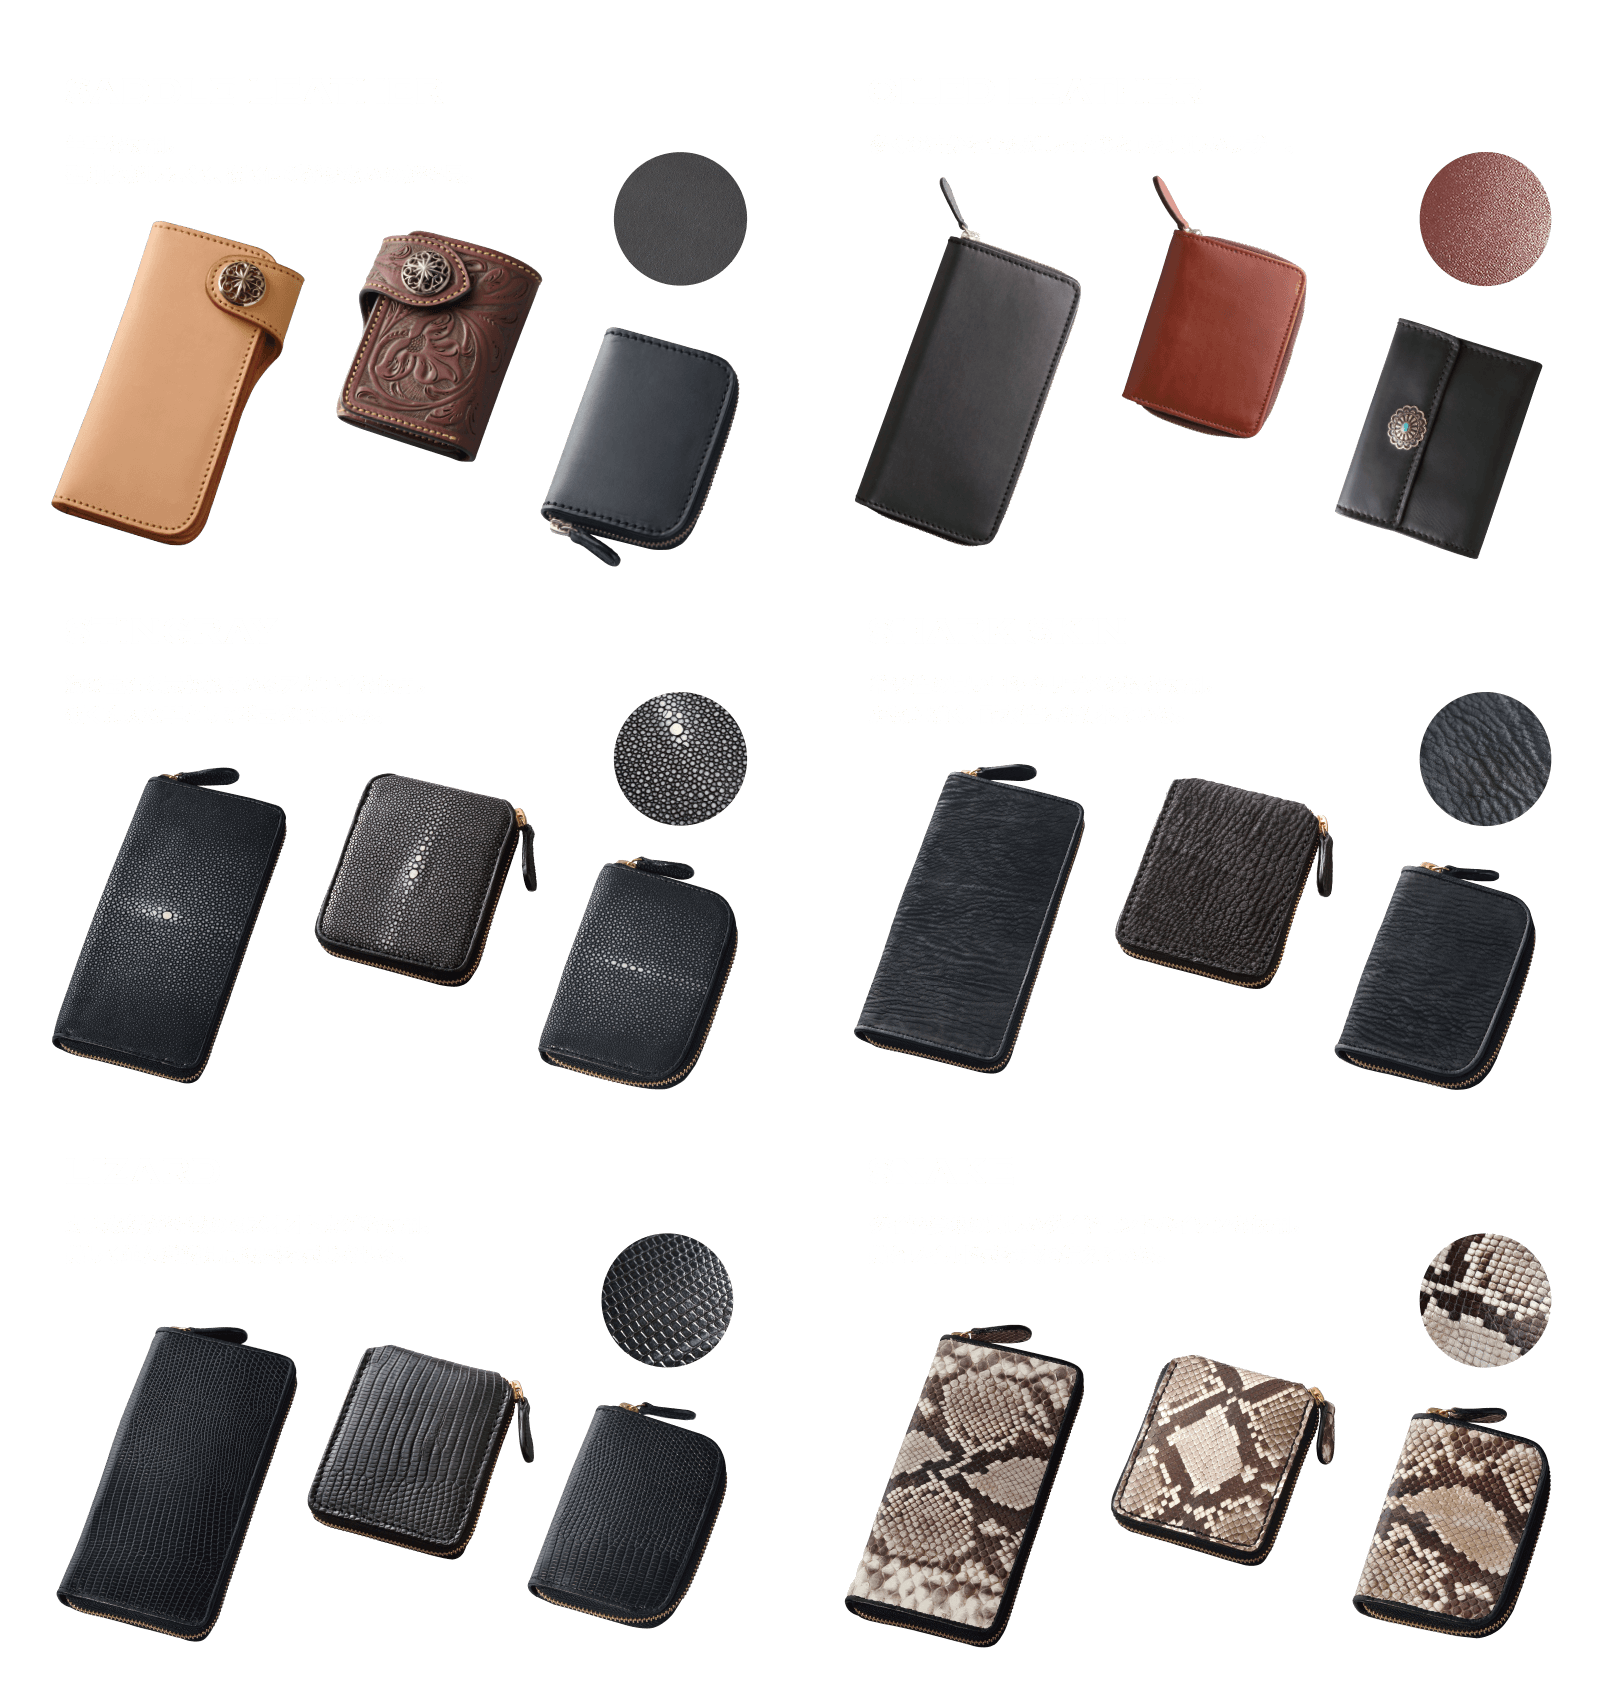 SAAD Leather Products